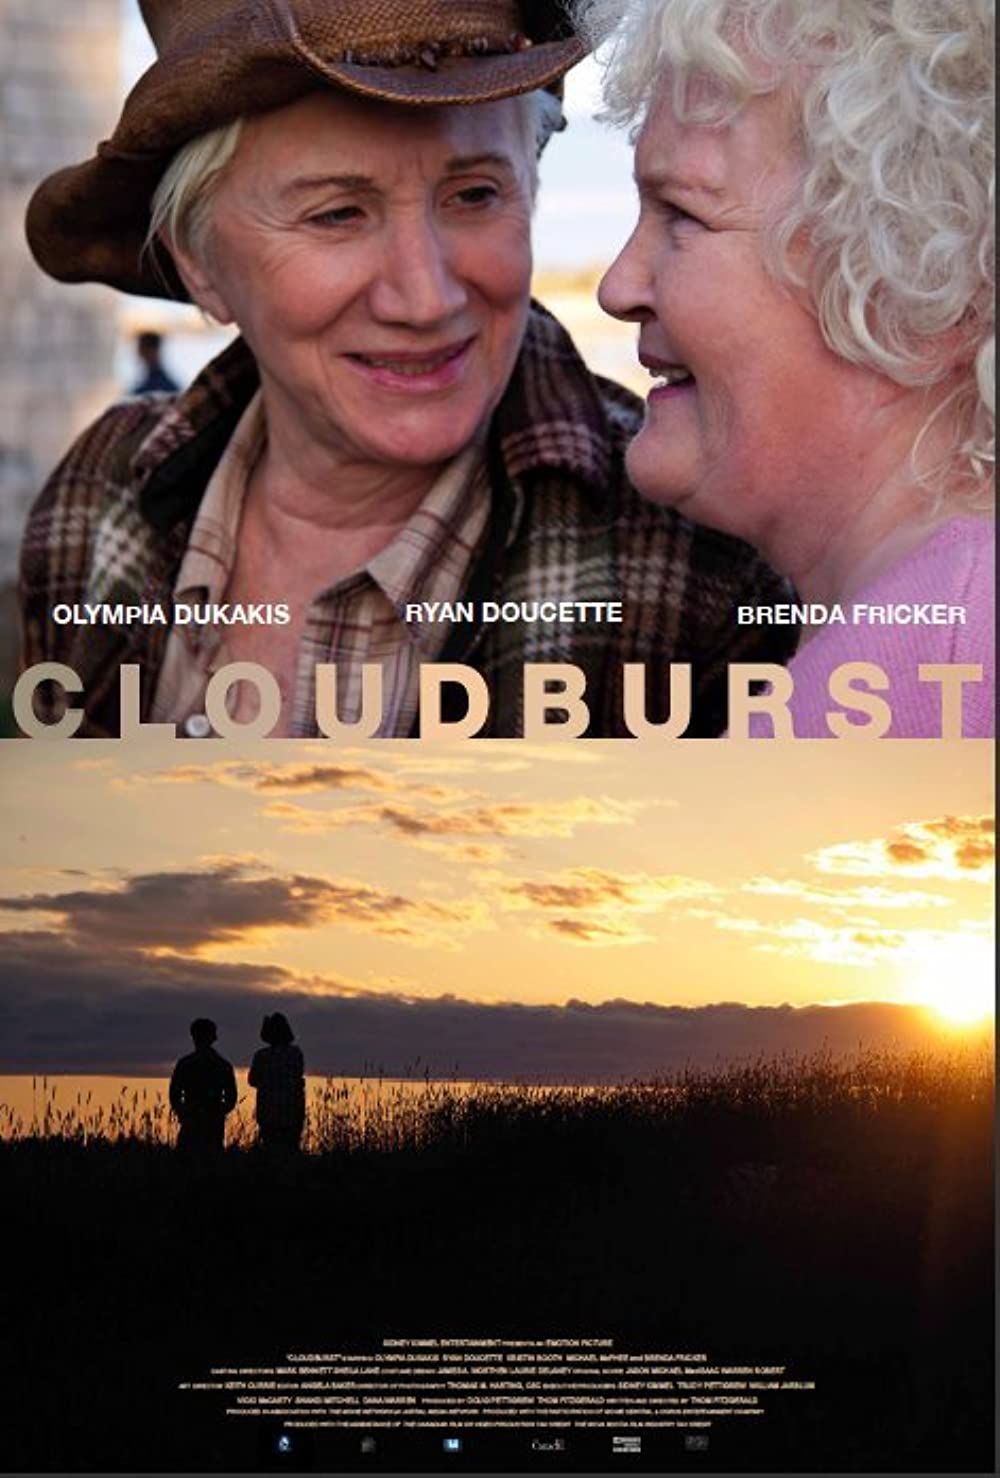 Filmbeschreibung zu Cloudburst